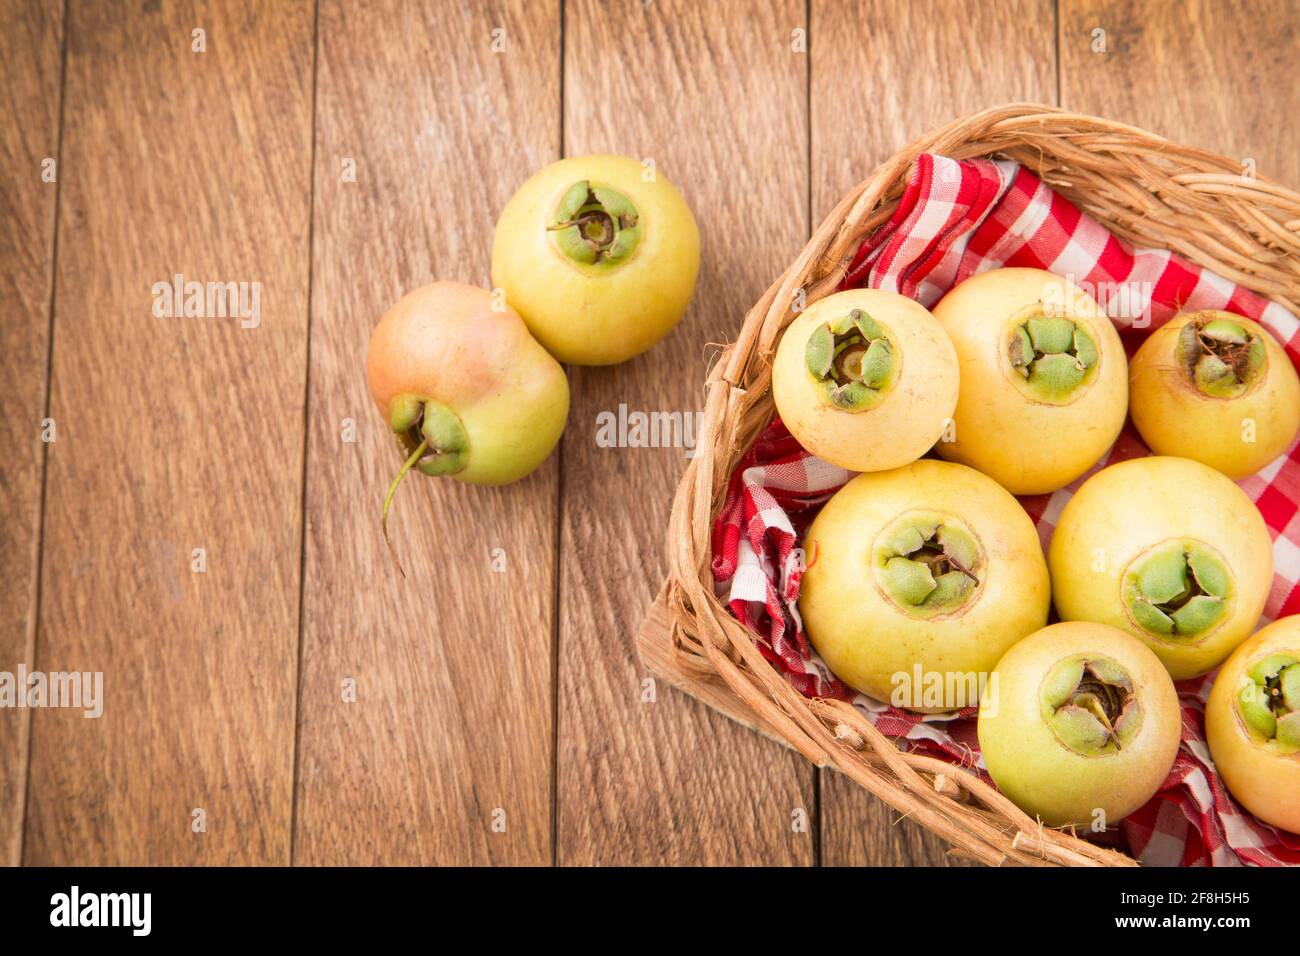 rose apple - Syzygium Jambos Stock Photo